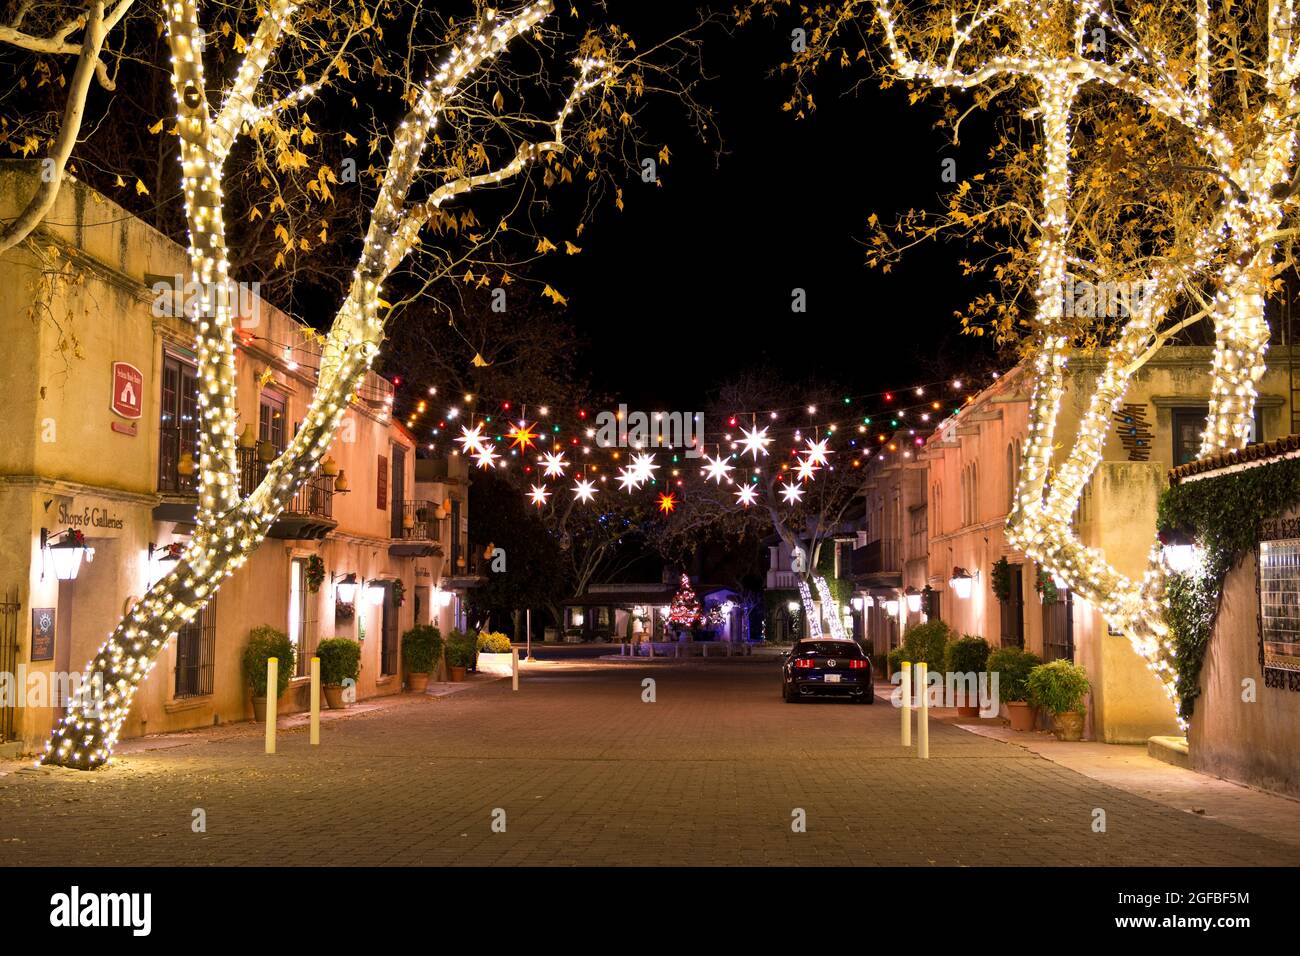 Christmas lights and holiday decorations at night at Tlaquepaque Arts and Shopping Village in Sedona, Arizona. Stock Photo